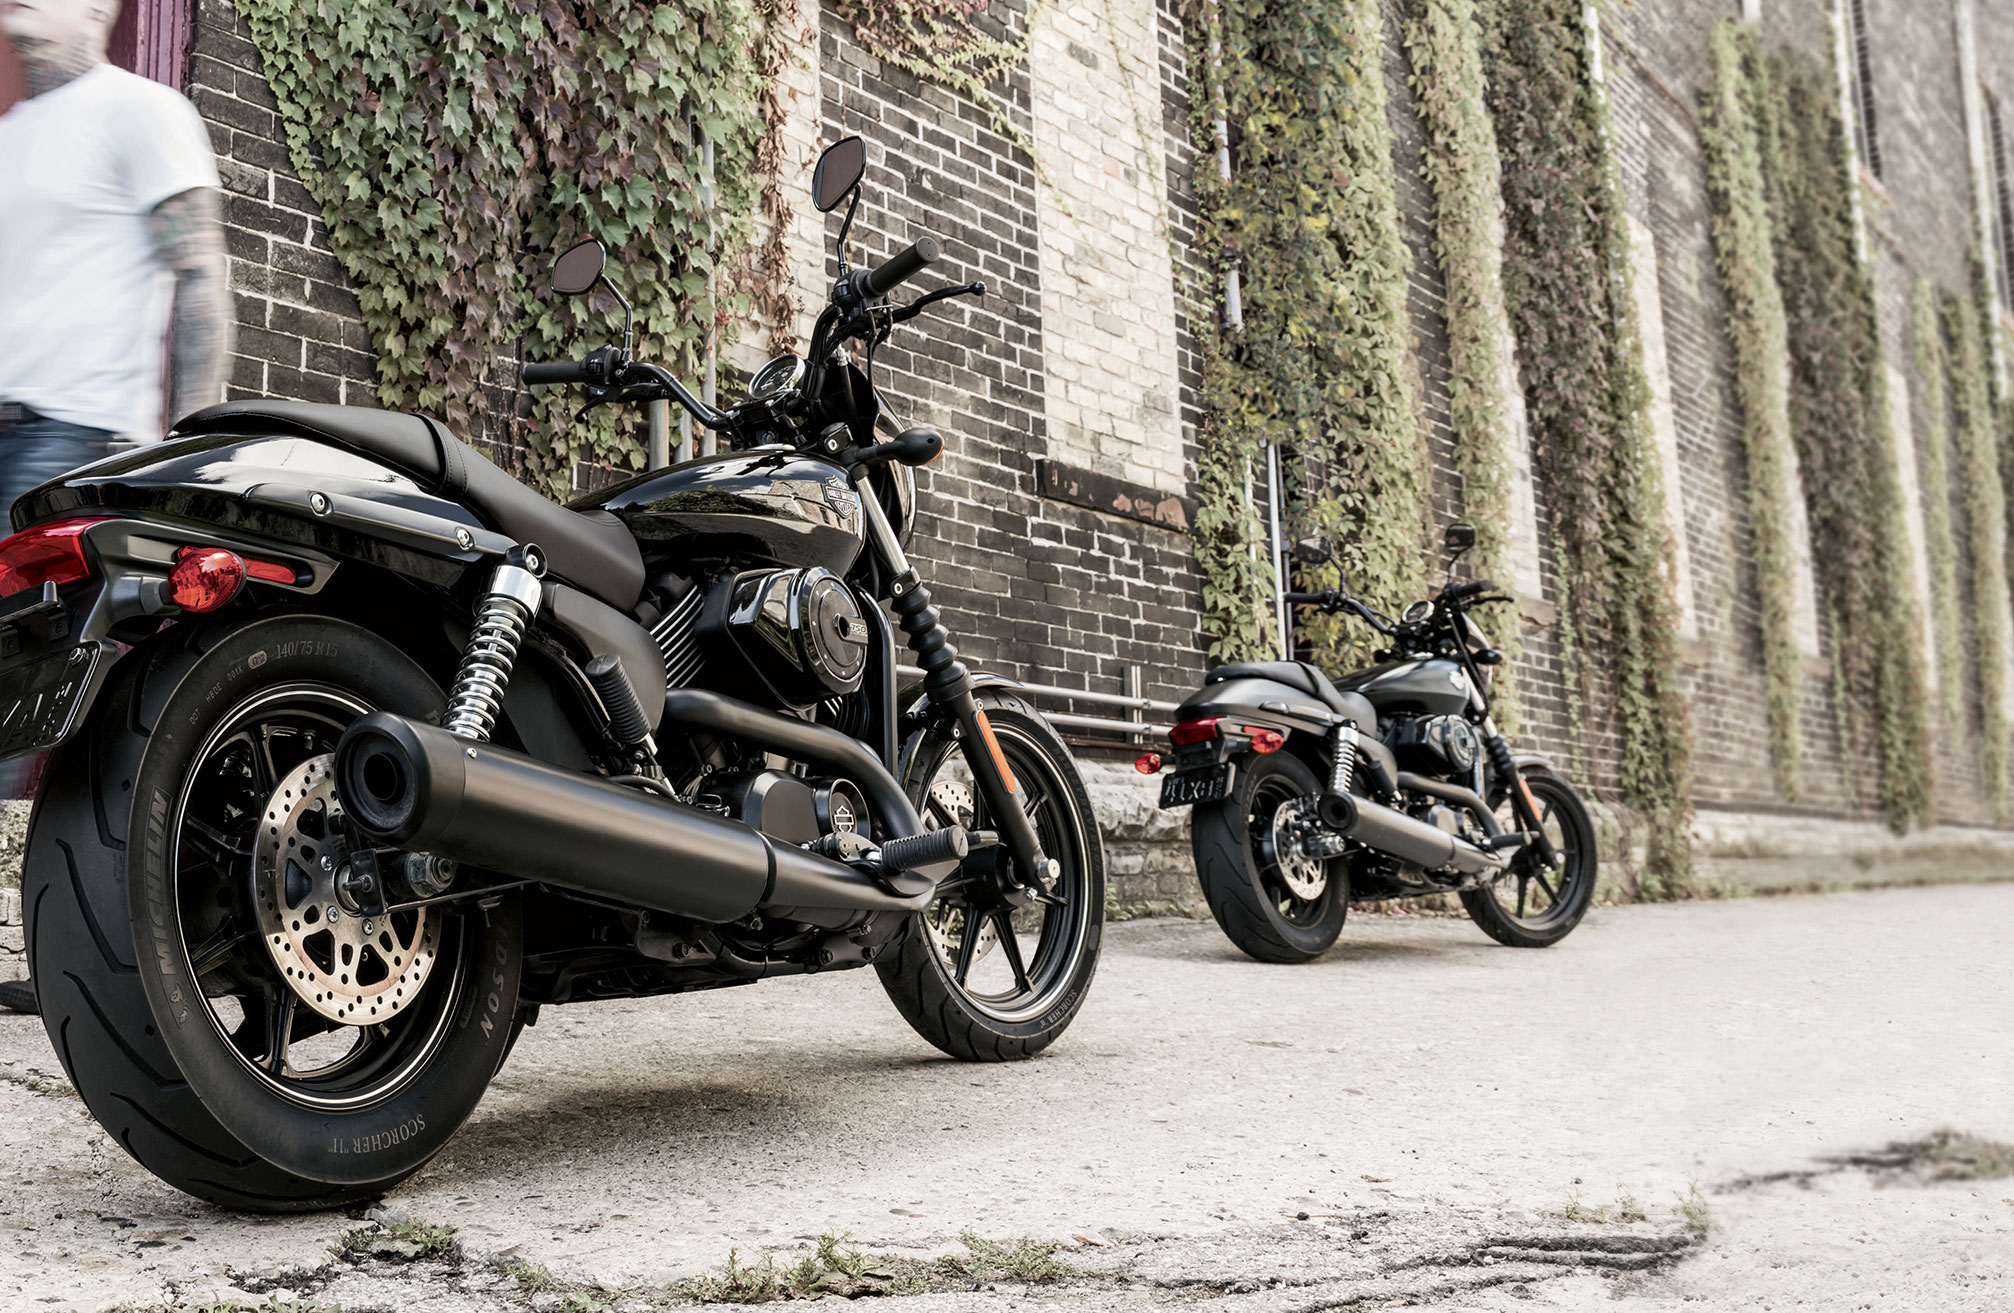 2014 Harley Davidson Street 500 Review